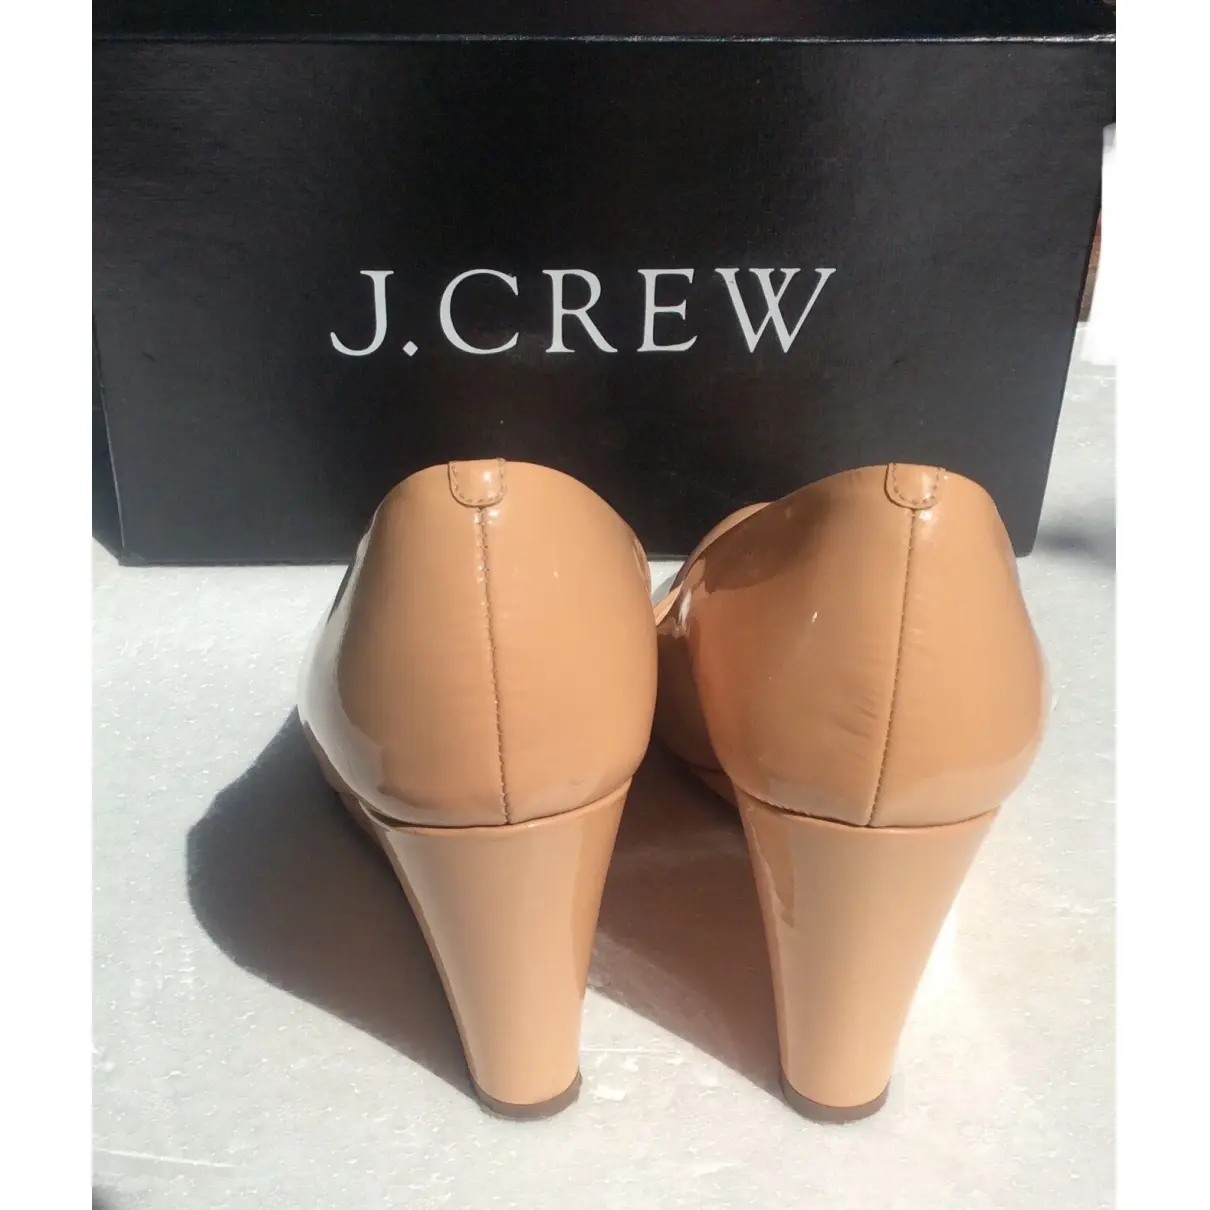 Buy J.Crew Patent leather heels online